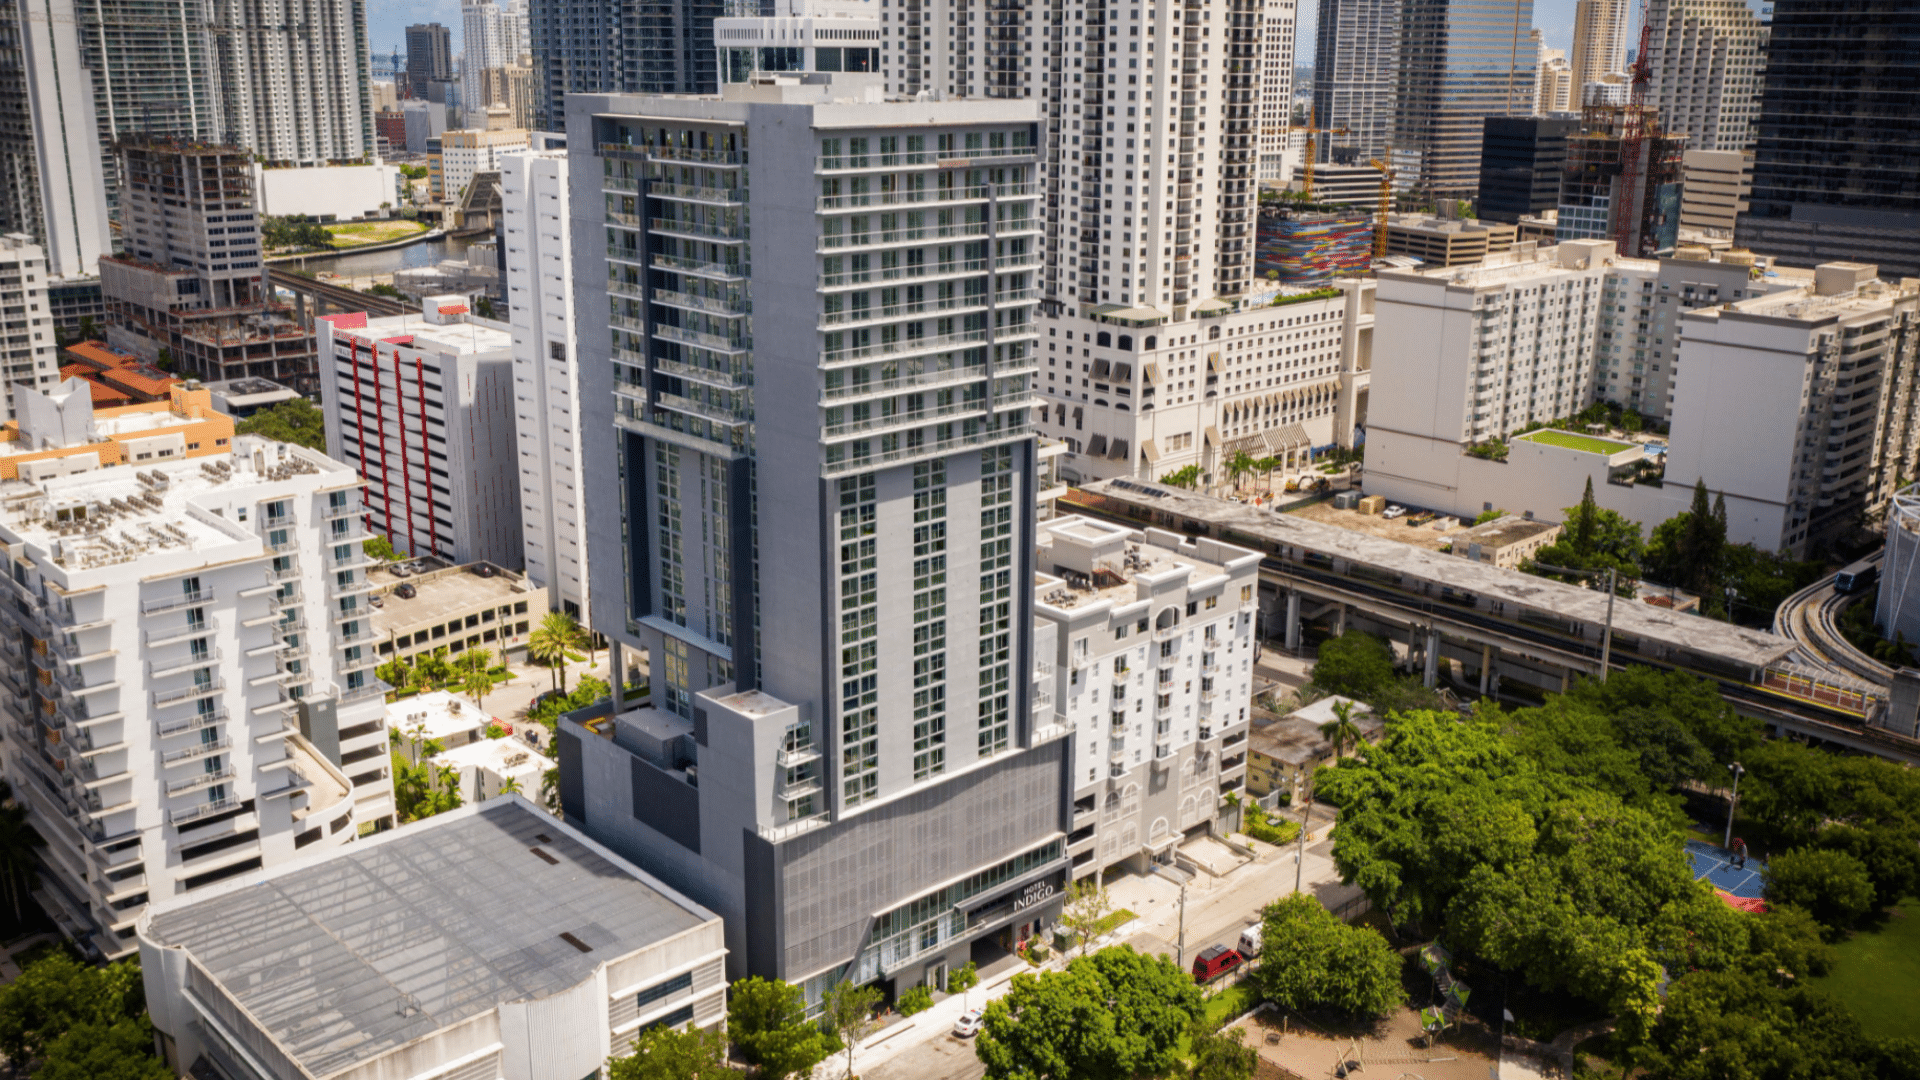 IHG Atwell Suites Hotel Miami, Hotelansicht